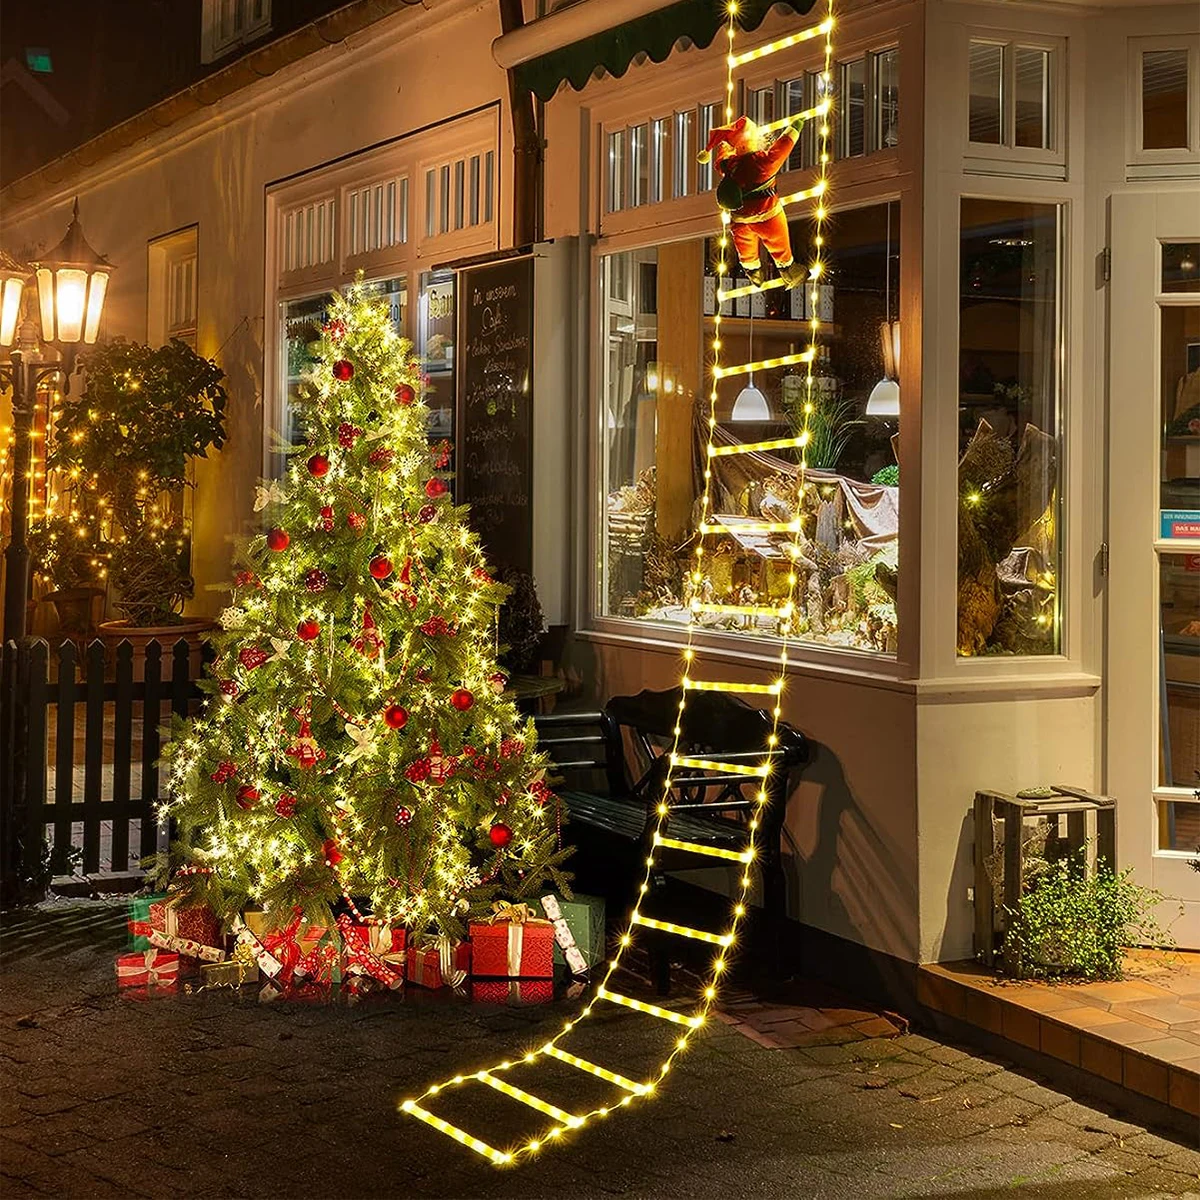 

Santa Claus LED Light Strings Climbing The Ladder Christmas Wall Window Pendant Xmas Tree Party Ornaments Outdoor Yard Decor